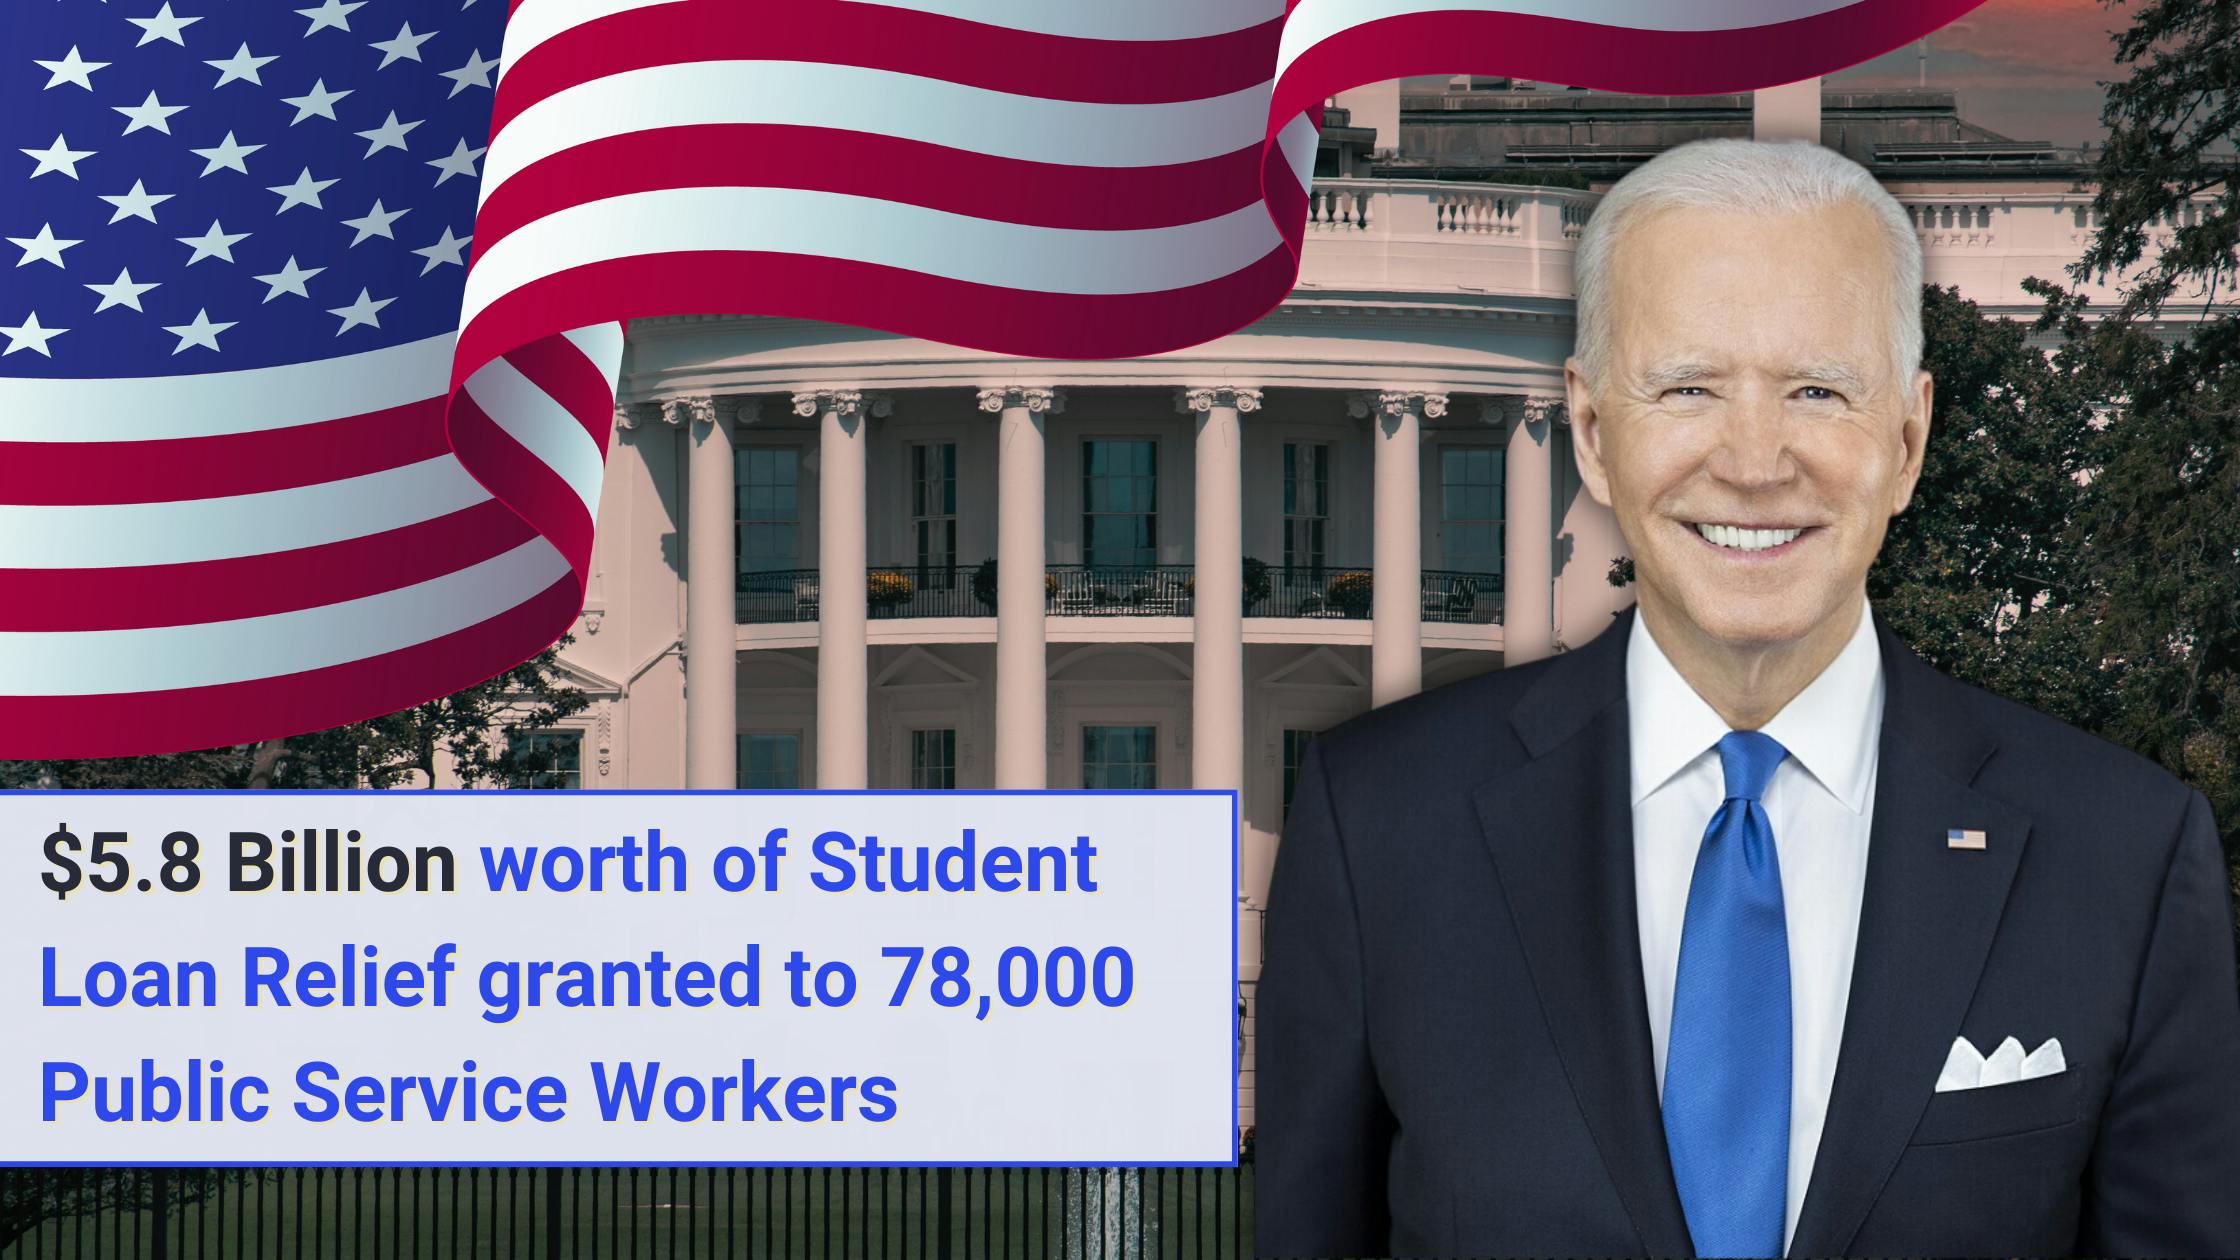 Biden-Harris Administration Grants $5.8 Billion in Student Loan Relief to 78,000 Public Service Workers